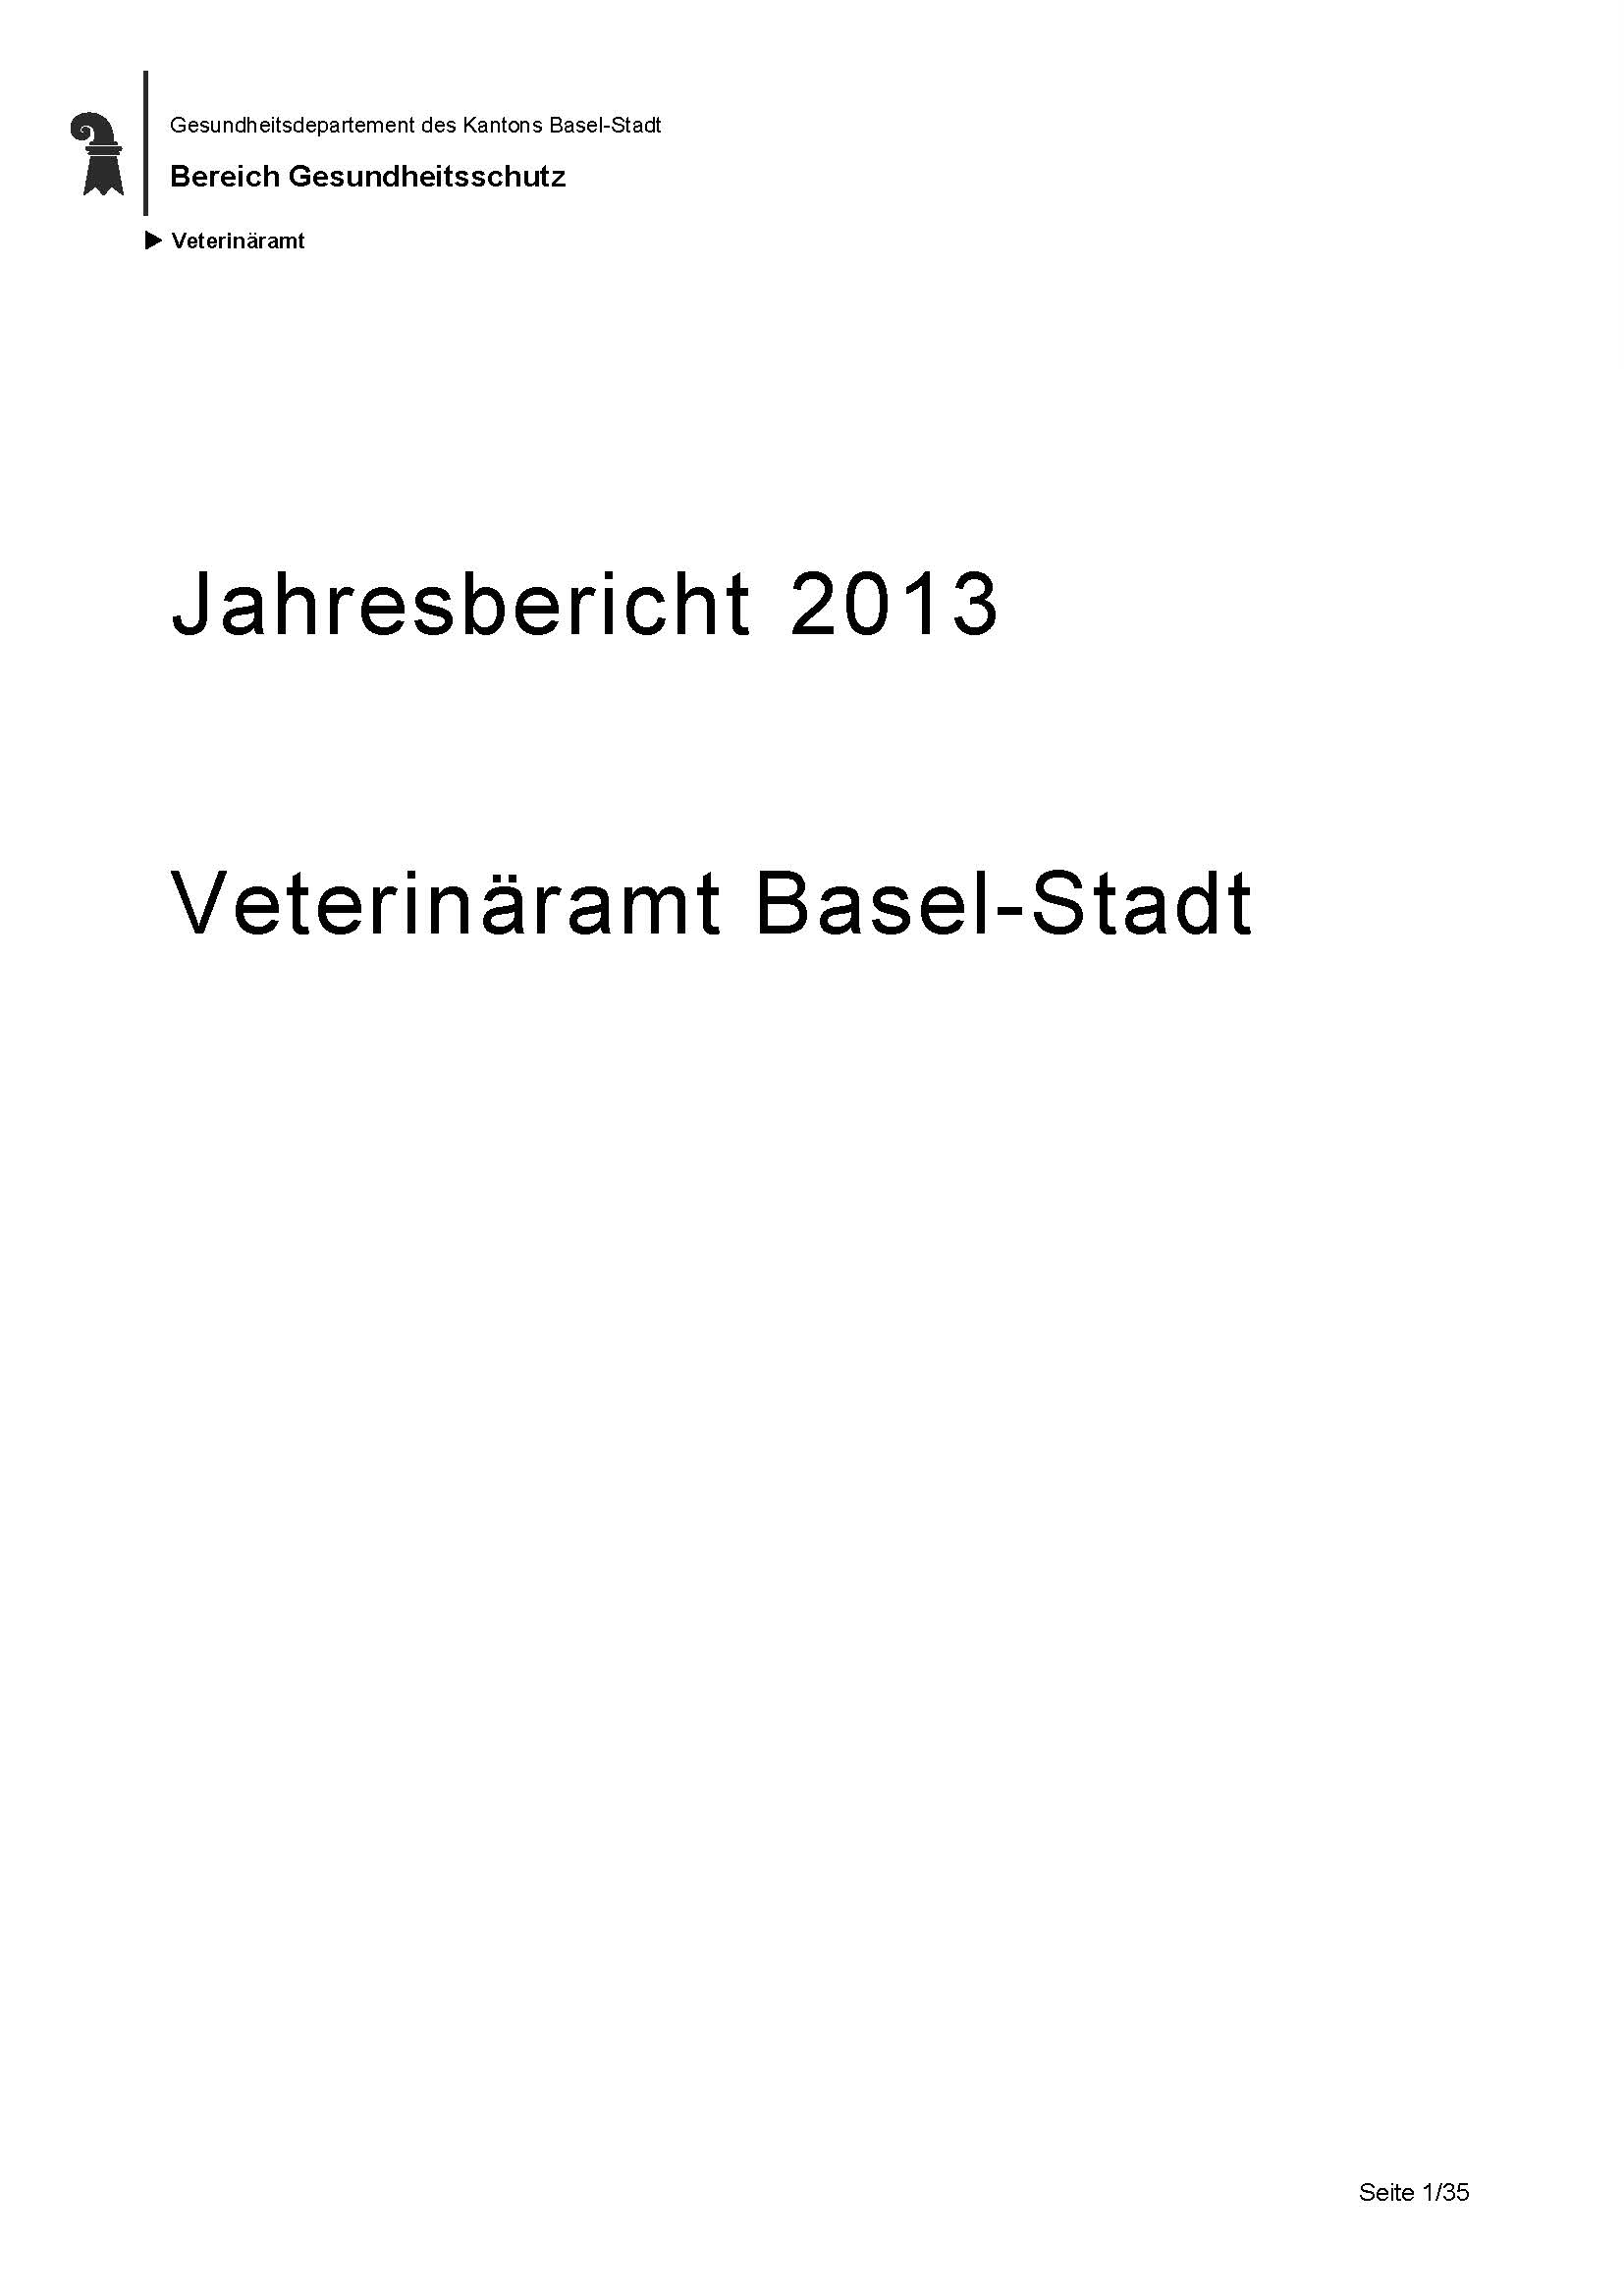 Jahresbericht 2013 Veterinäramt Basel-Stadt